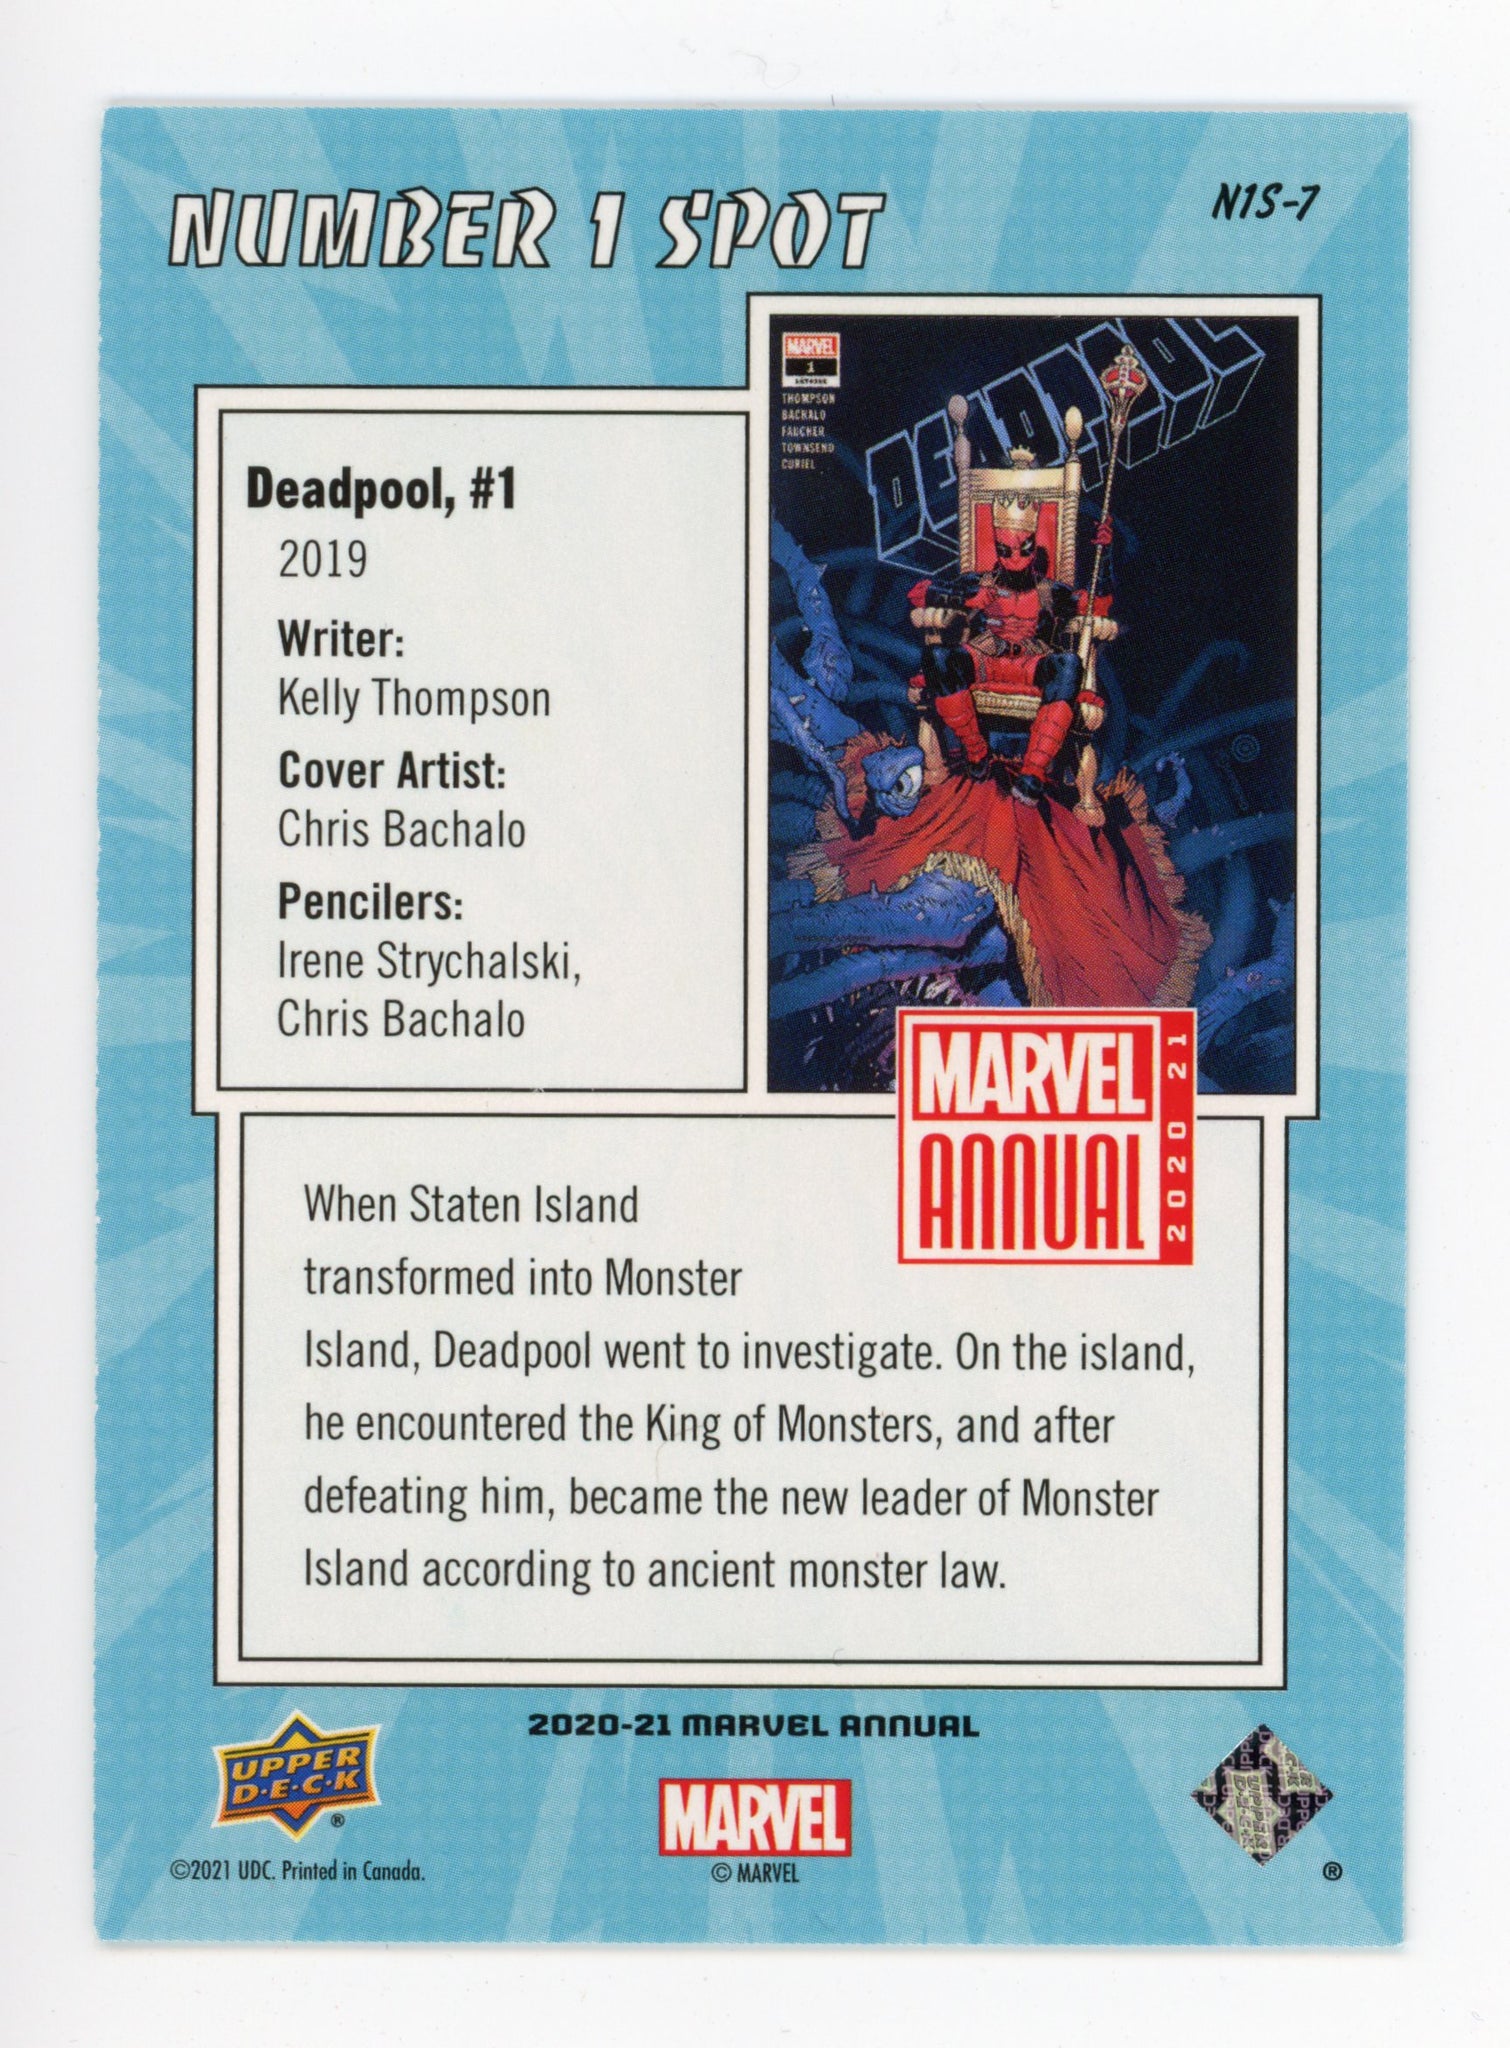 2020-2021 Deadpool Number 1 Spot Upper Deck Marvel Annual # N1S-7